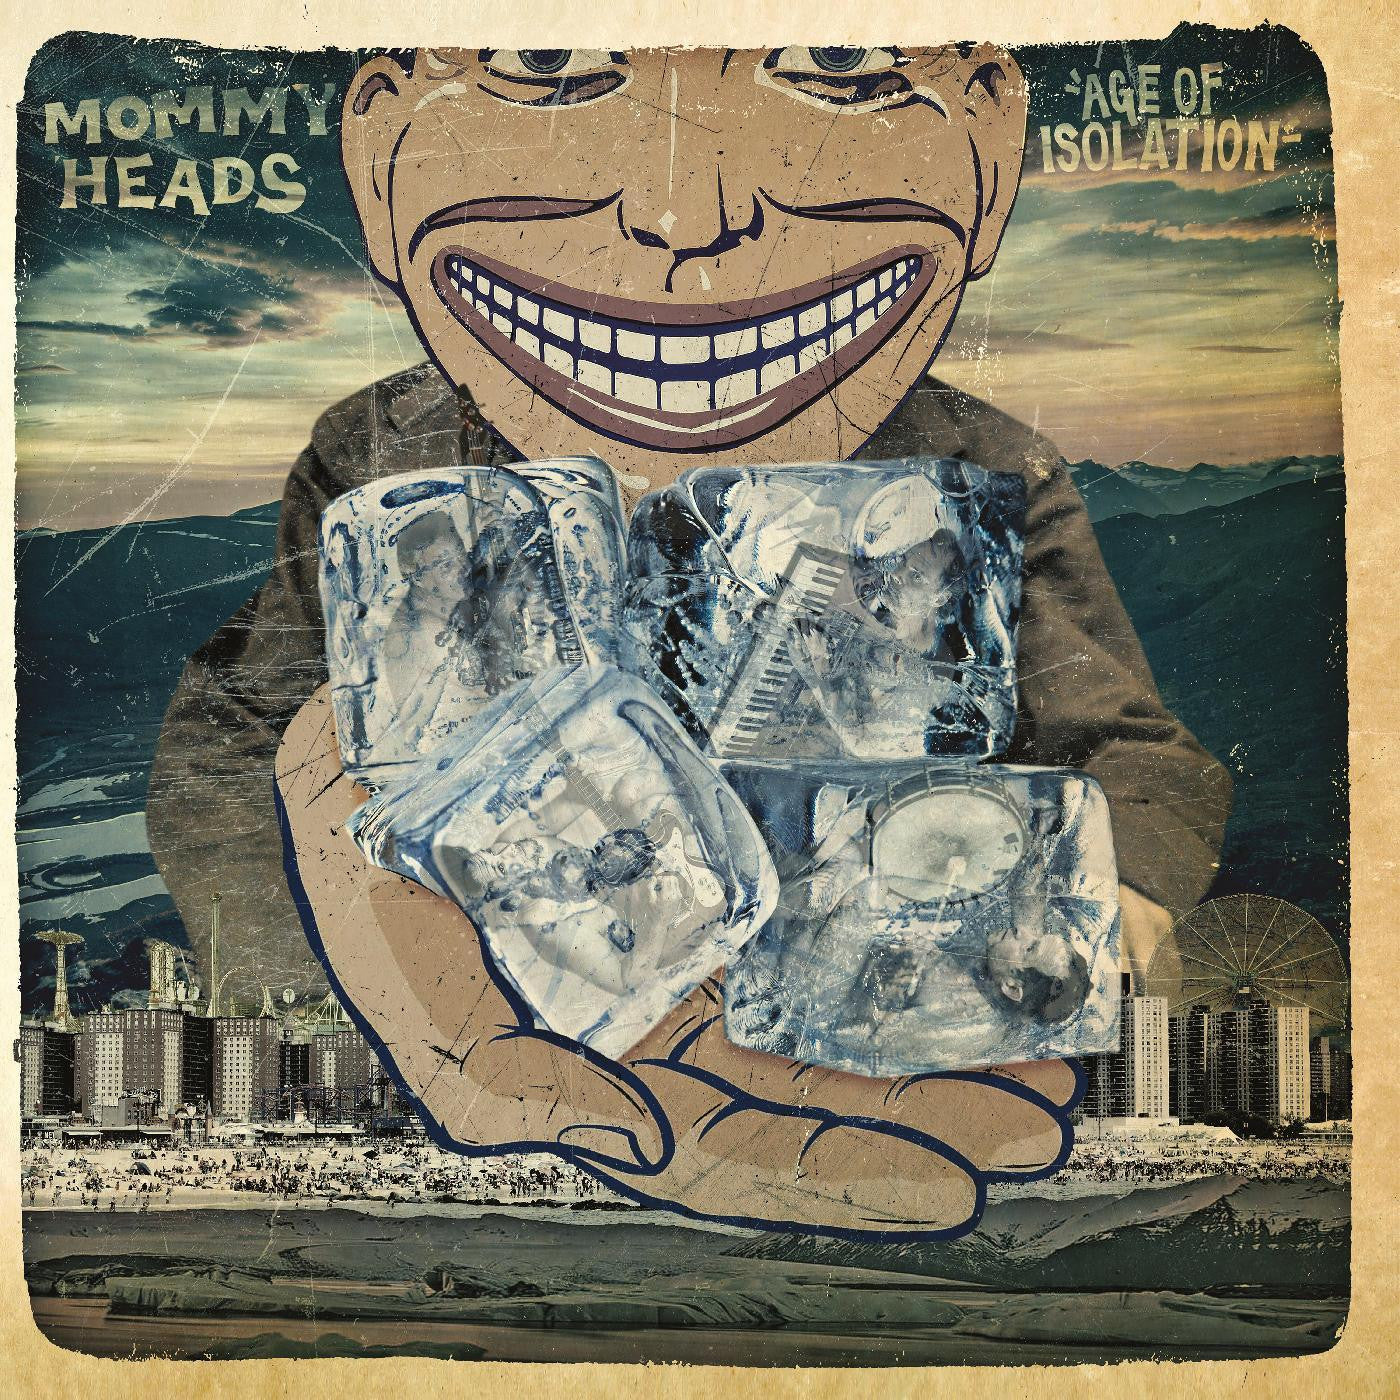 Mommyheads - Age of Isolation (Vinyl LP)